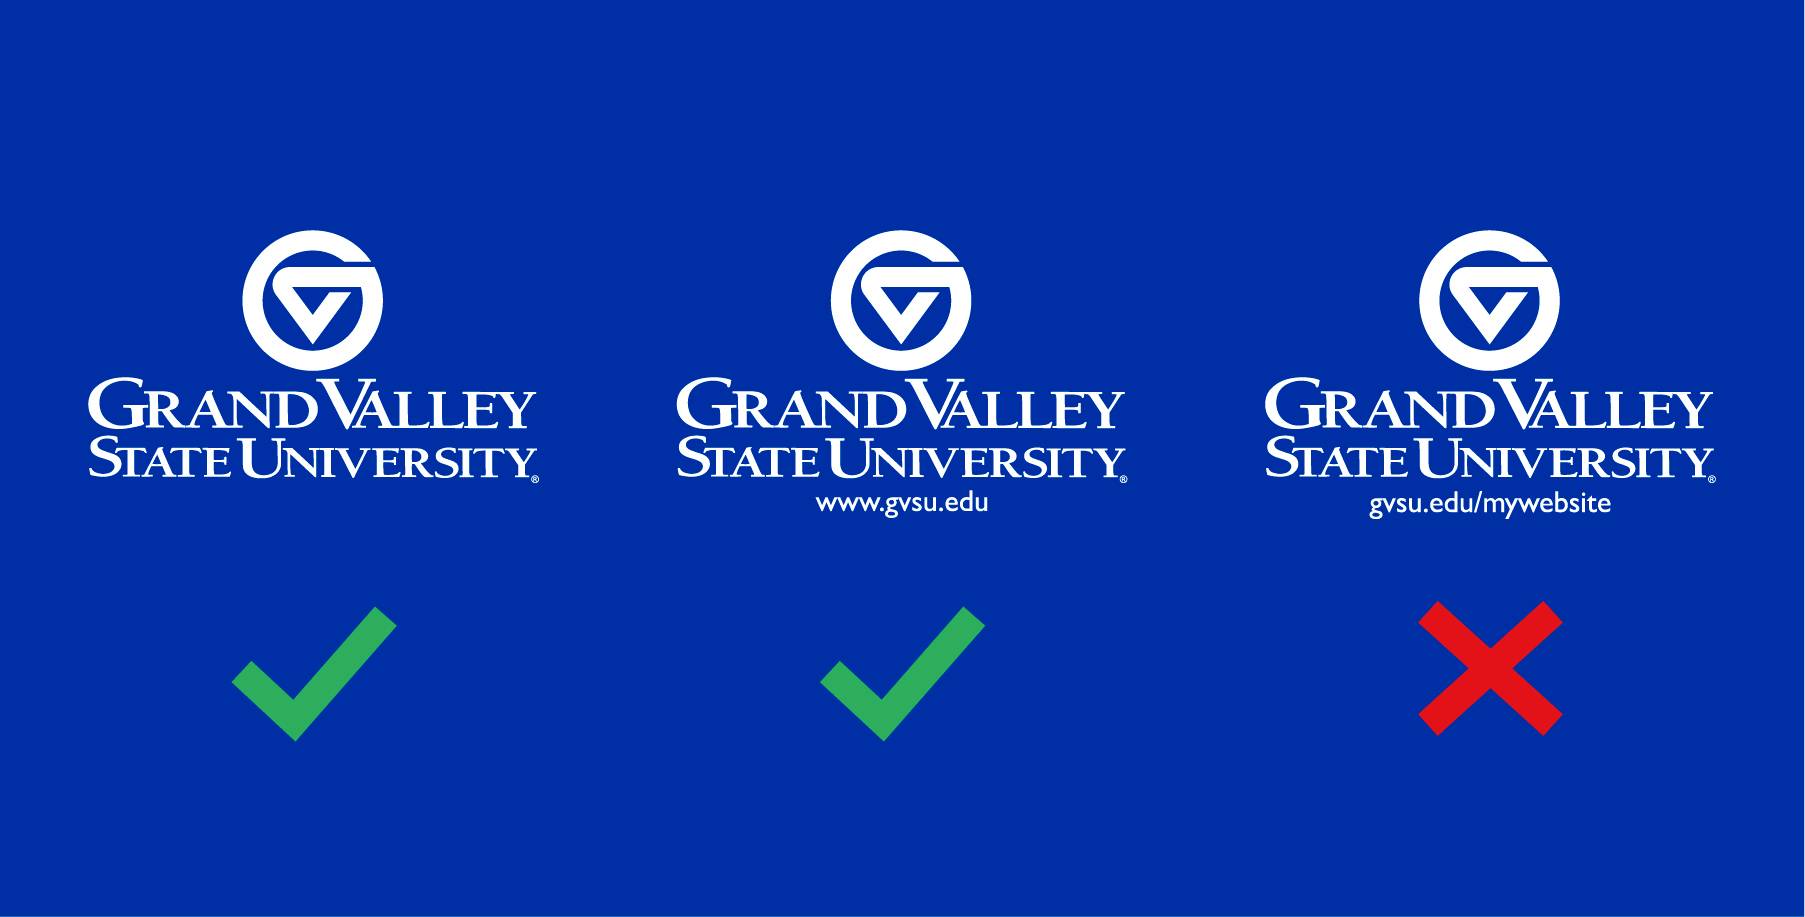 Grand Valley logos properly and improperly using web addresses beneath them.